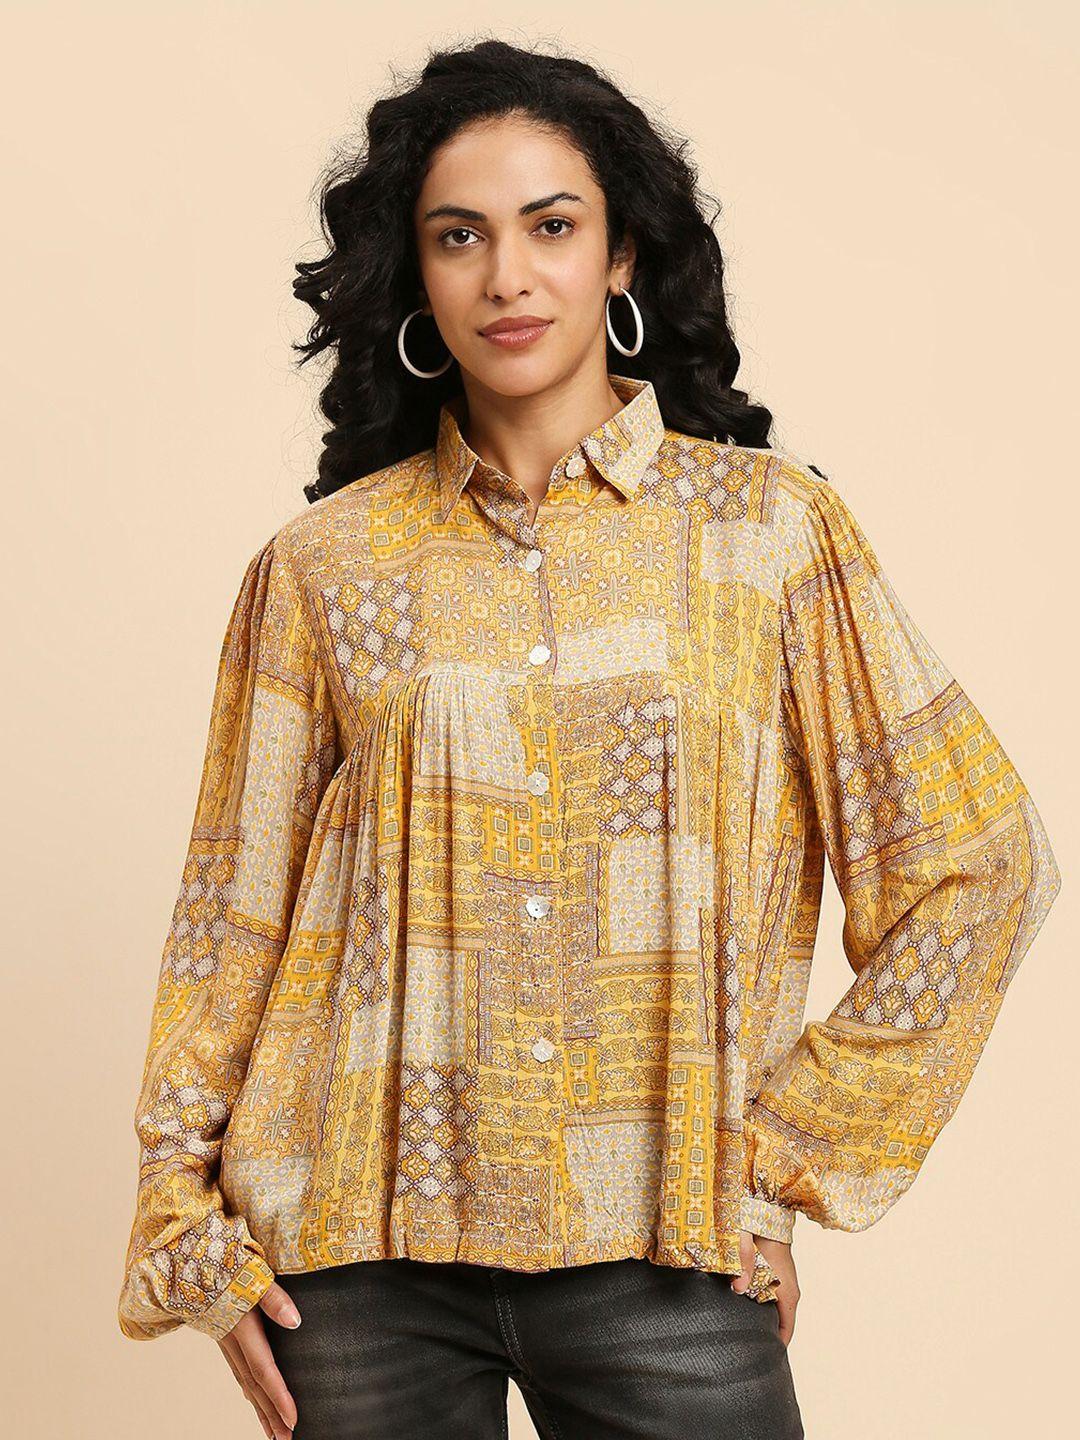 gufrina ethnic motif printed shirt collar gathered & pleated shirt style top